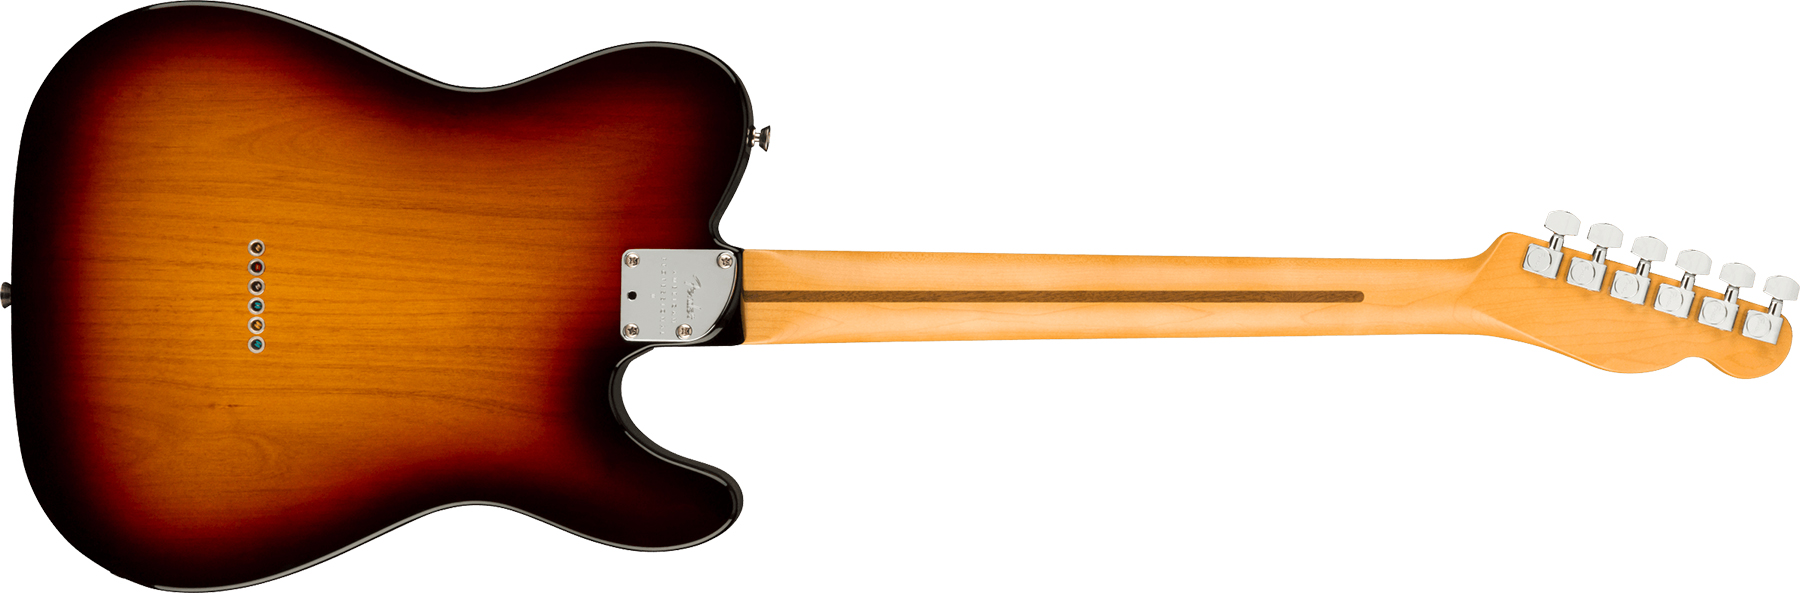 Fender Tele American Professional Ii Lh Gaucher Usa Rw - 3-color Sunburst - Left-handed electric guitar - Variation 1